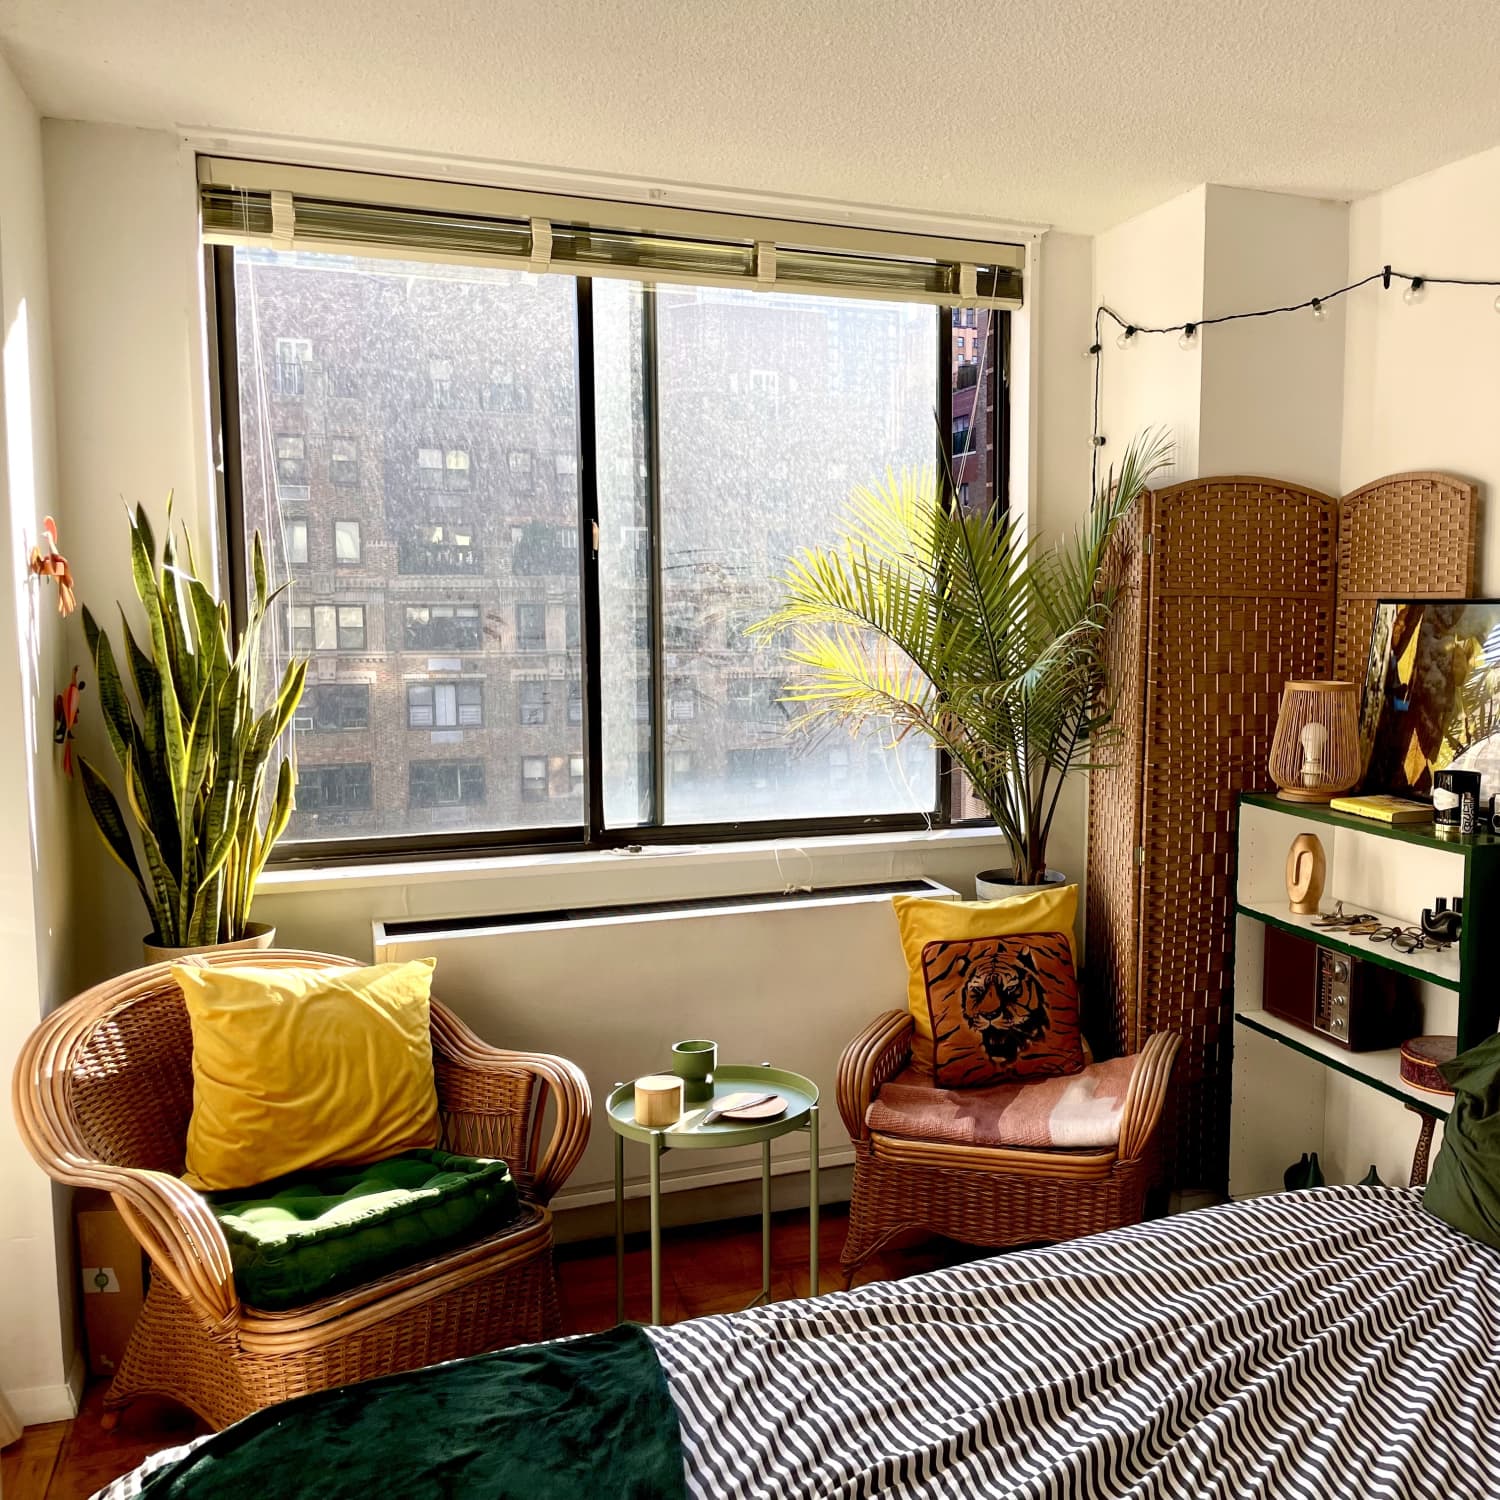 Inspiring ideas for a small cozy shared boho bedroom - IKEA